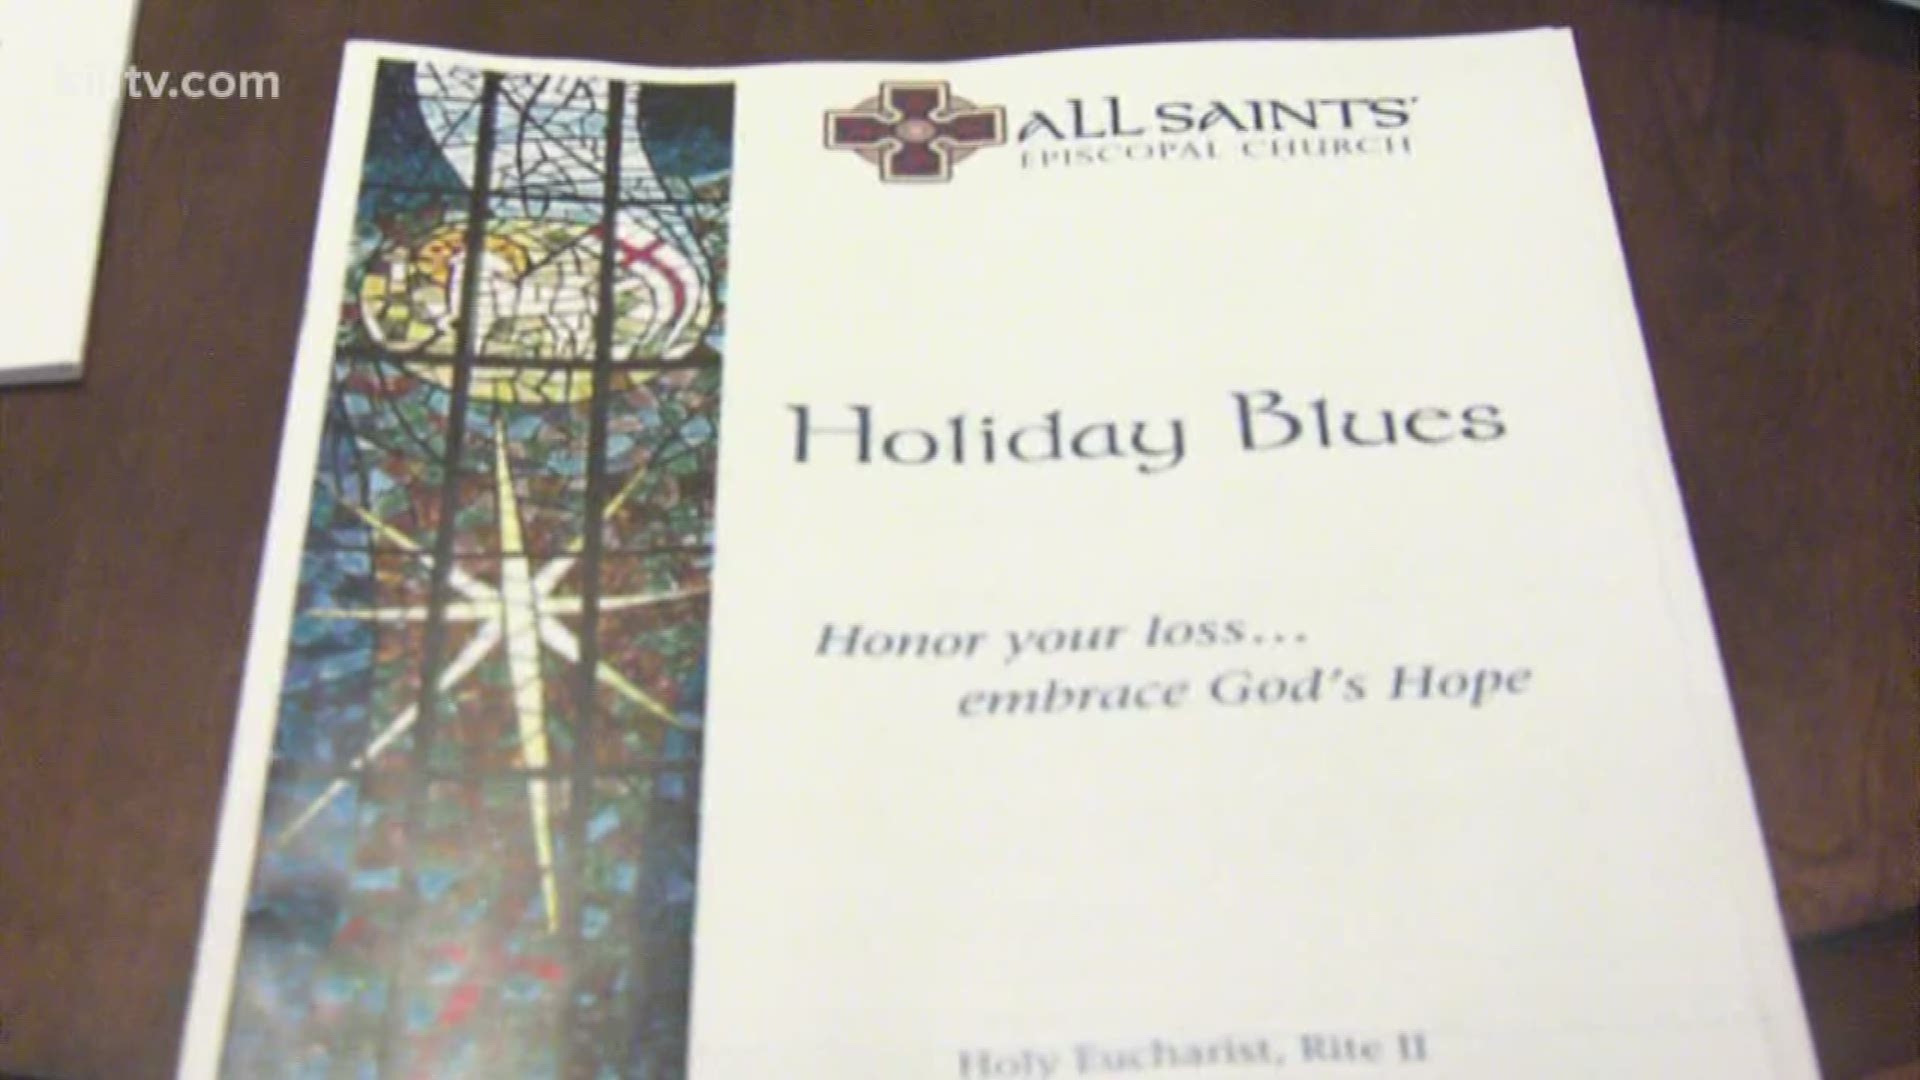 Prayer service helps beat holiday blues